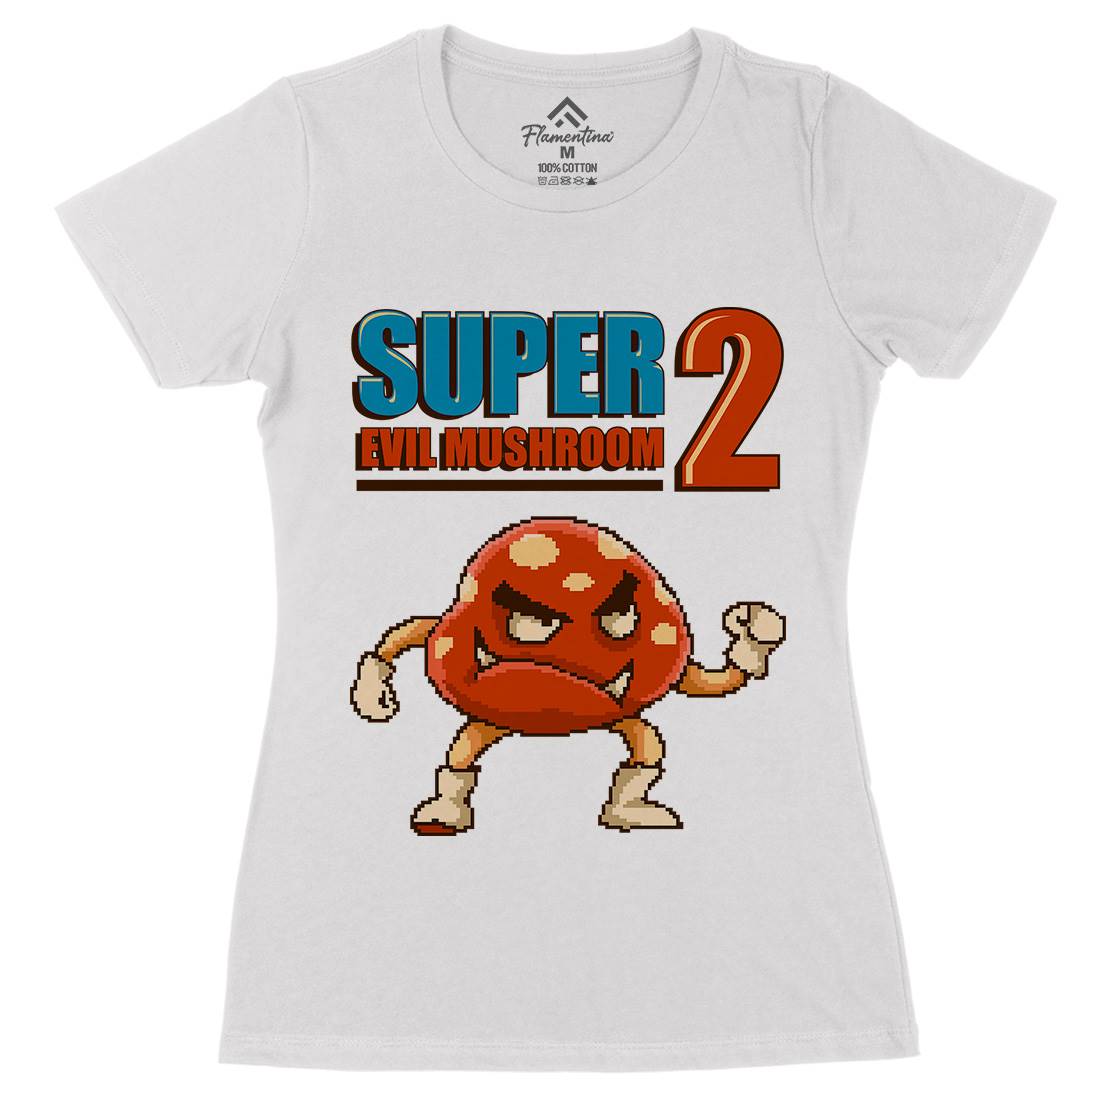 Super Evil Mushroom Womens Organic Crew Neck T-Shirt Geek B962